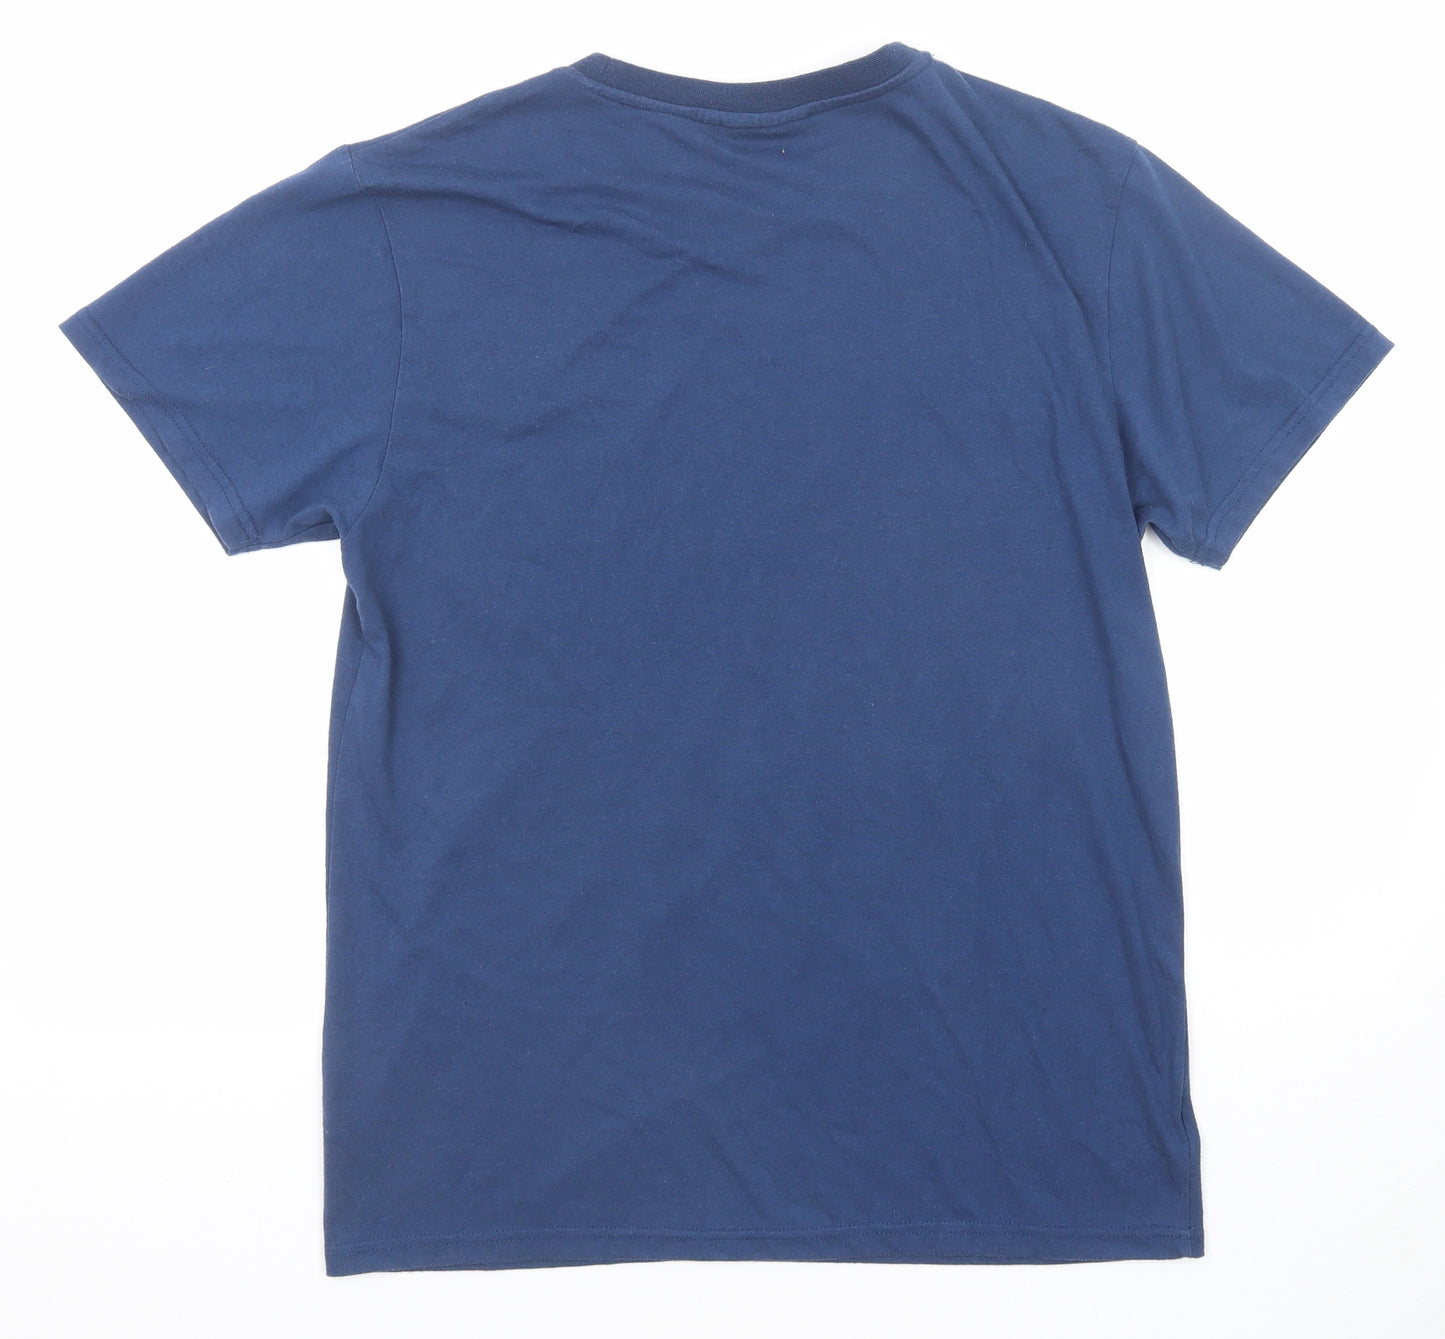 Marvel Mens Blue Polyester T-Shirt Size L Round Neck - Avengers